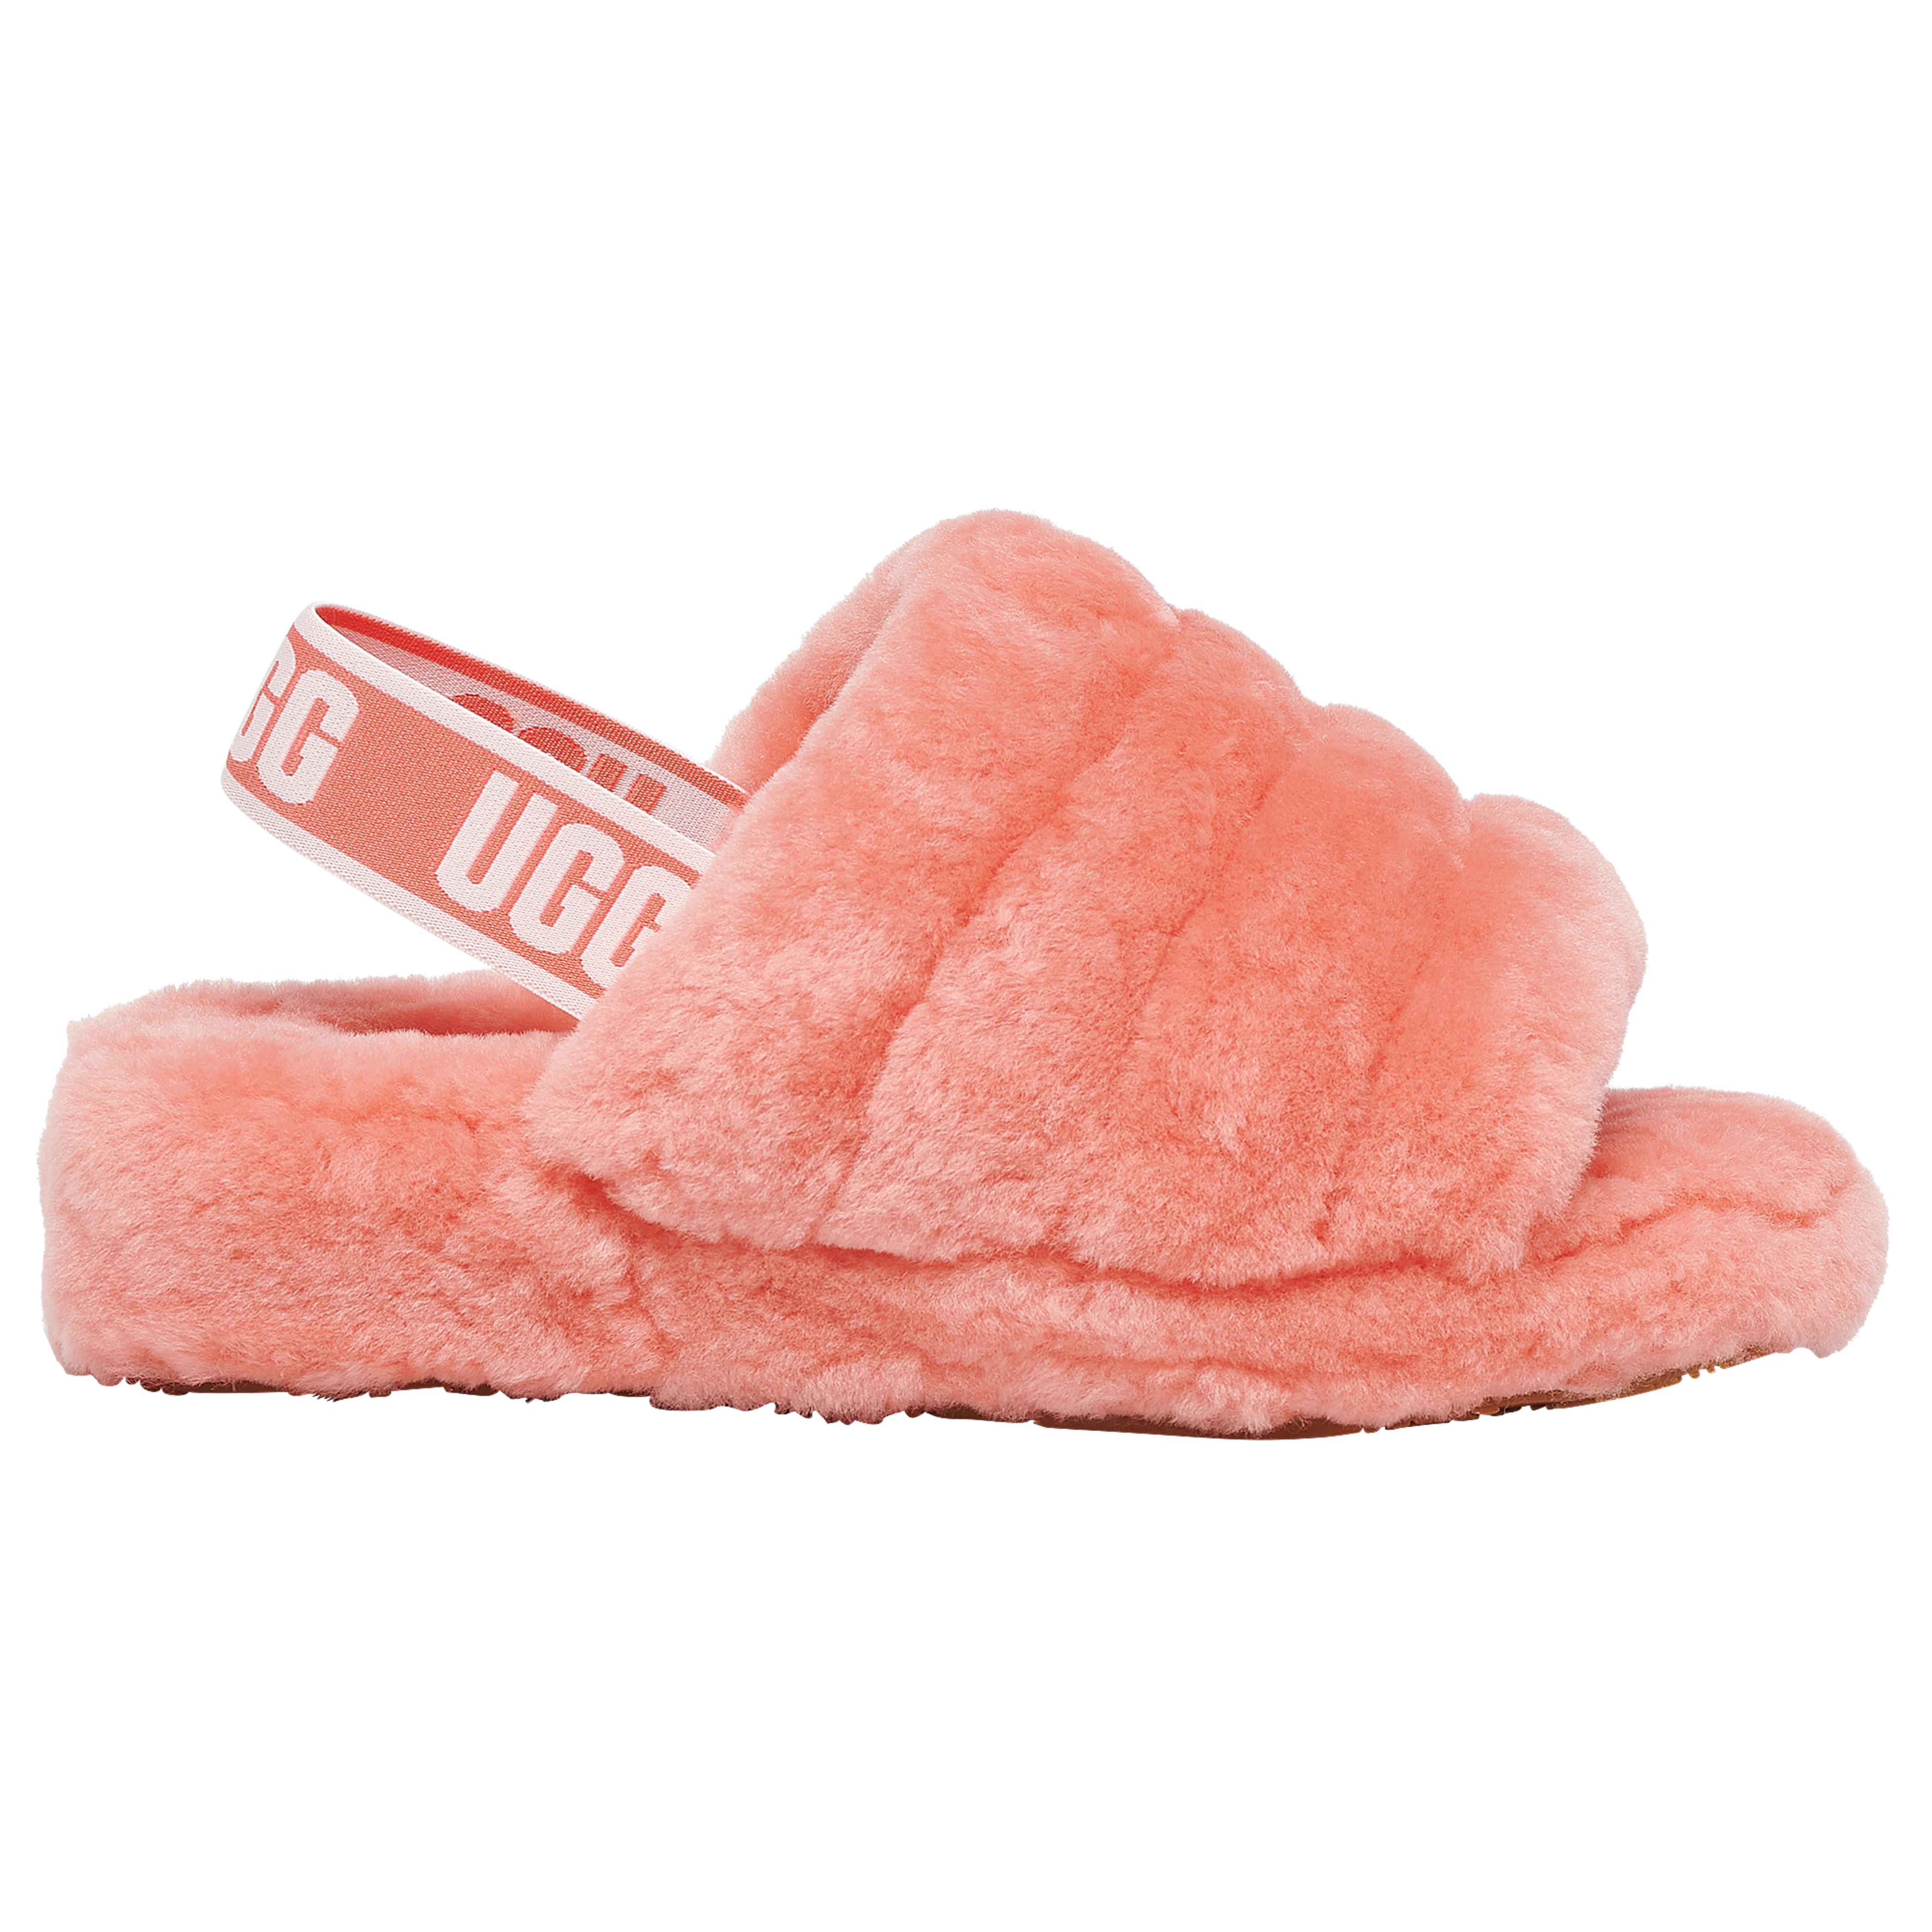 ugg fluff slippers pink